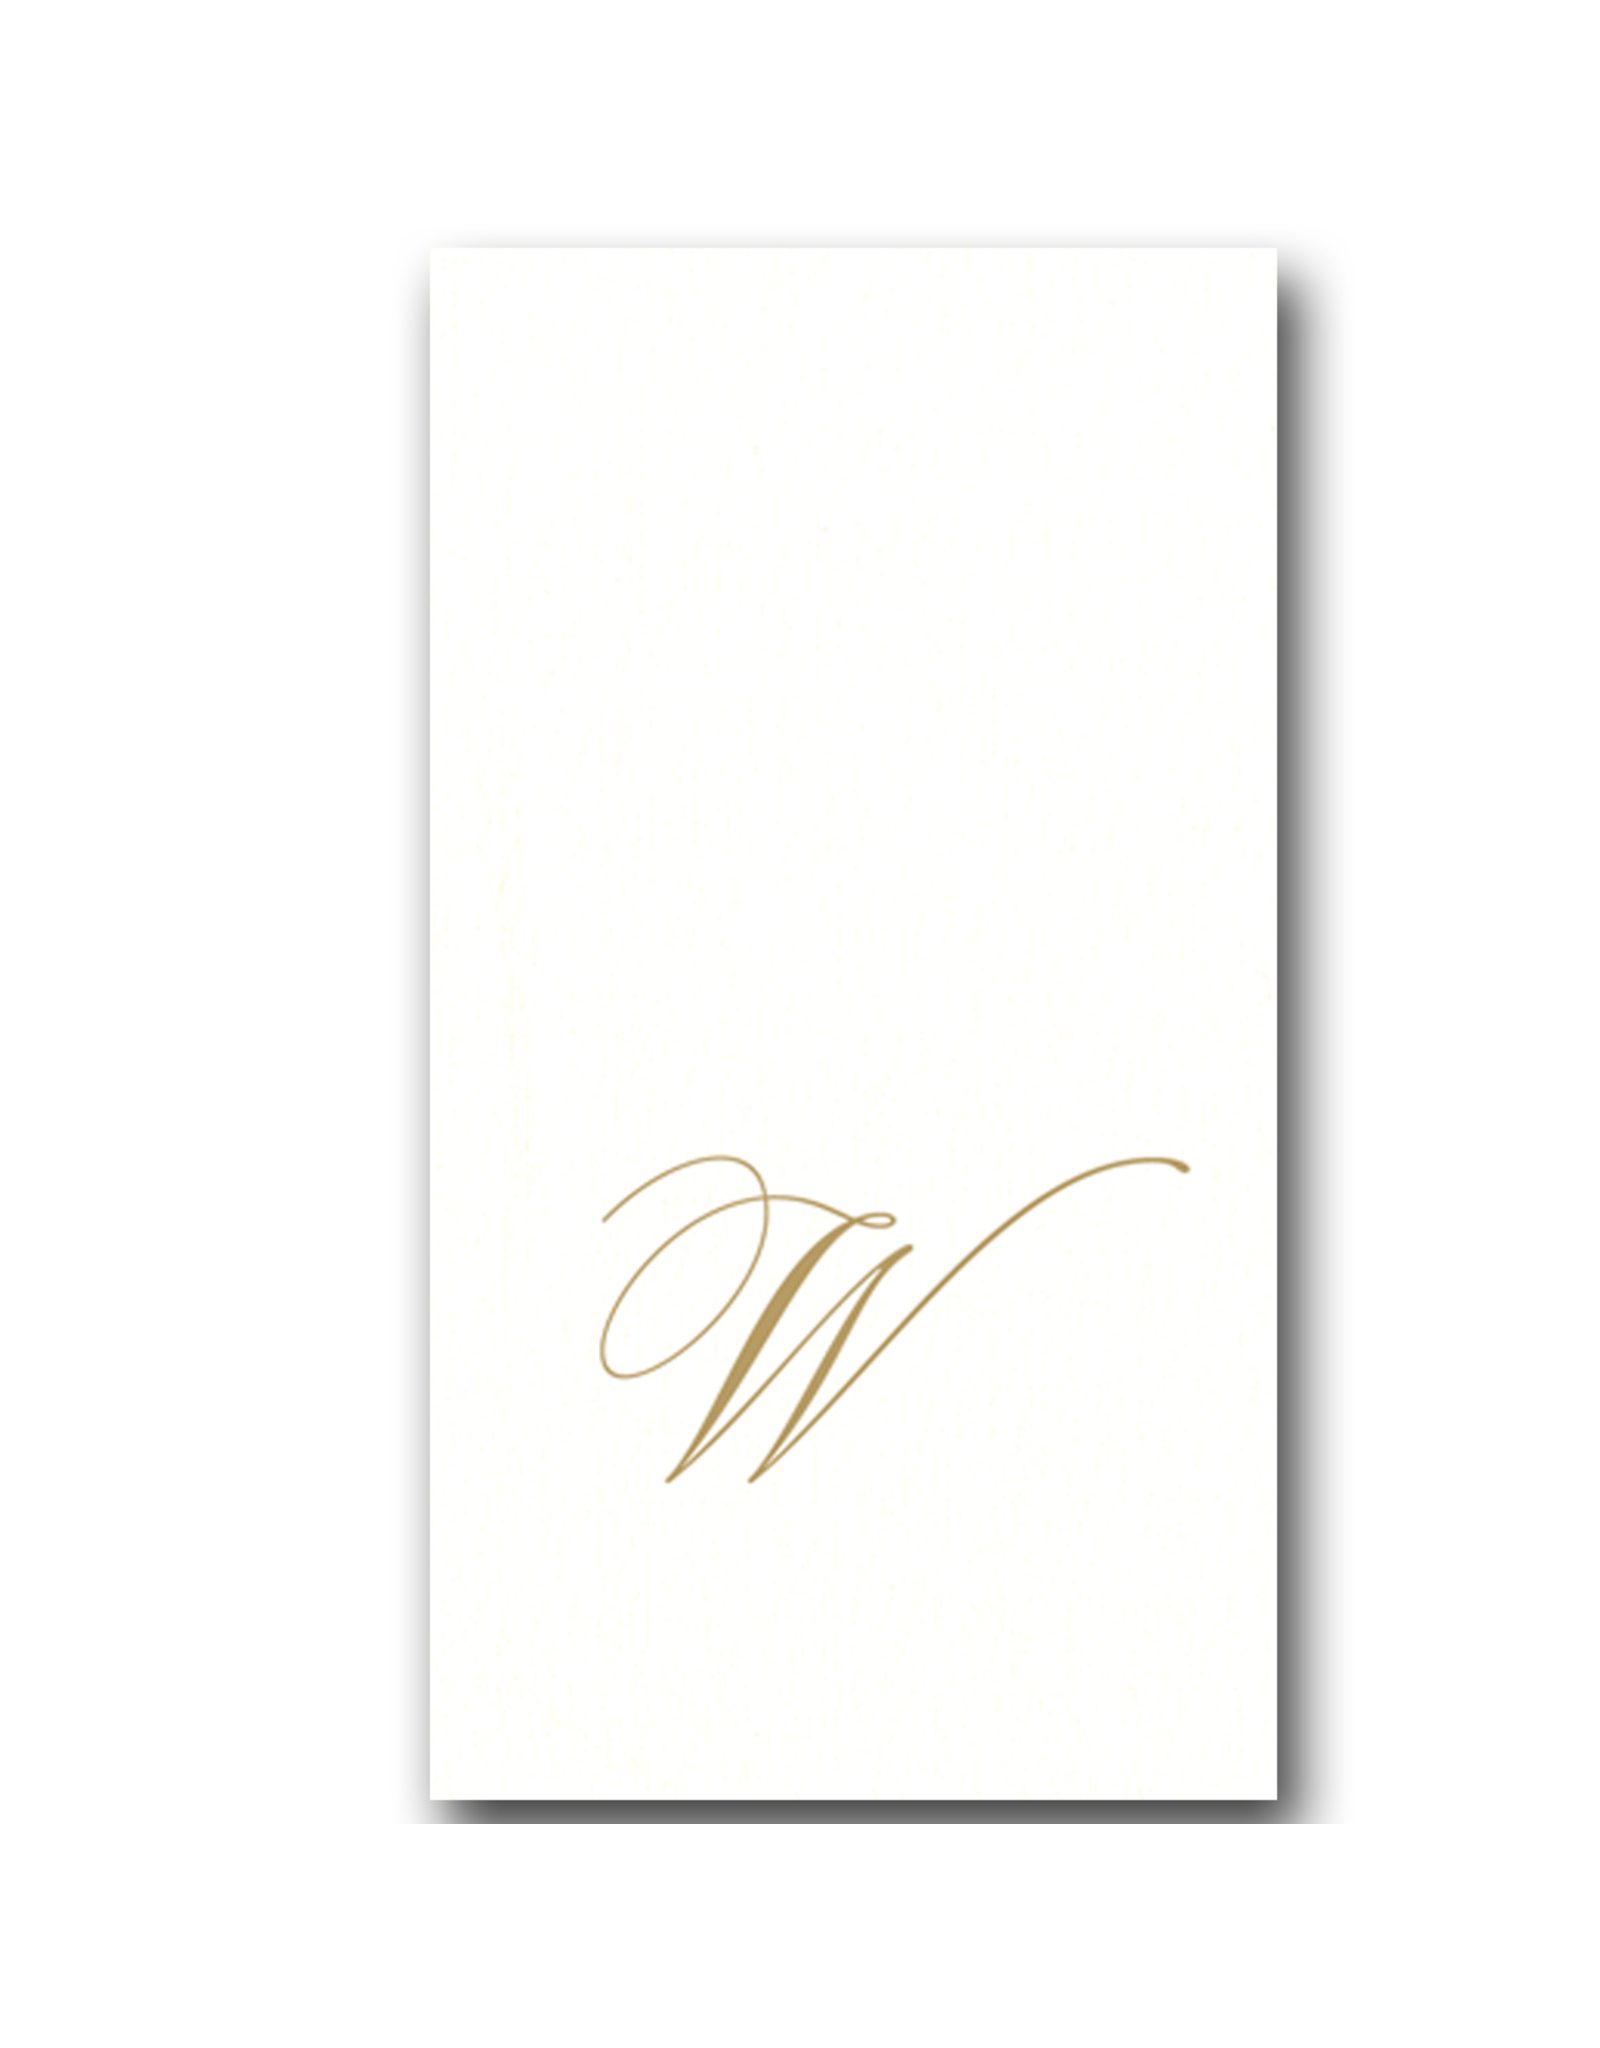 Caspari White Pearl Paper Linen Guest Napkins Initial W 24pk